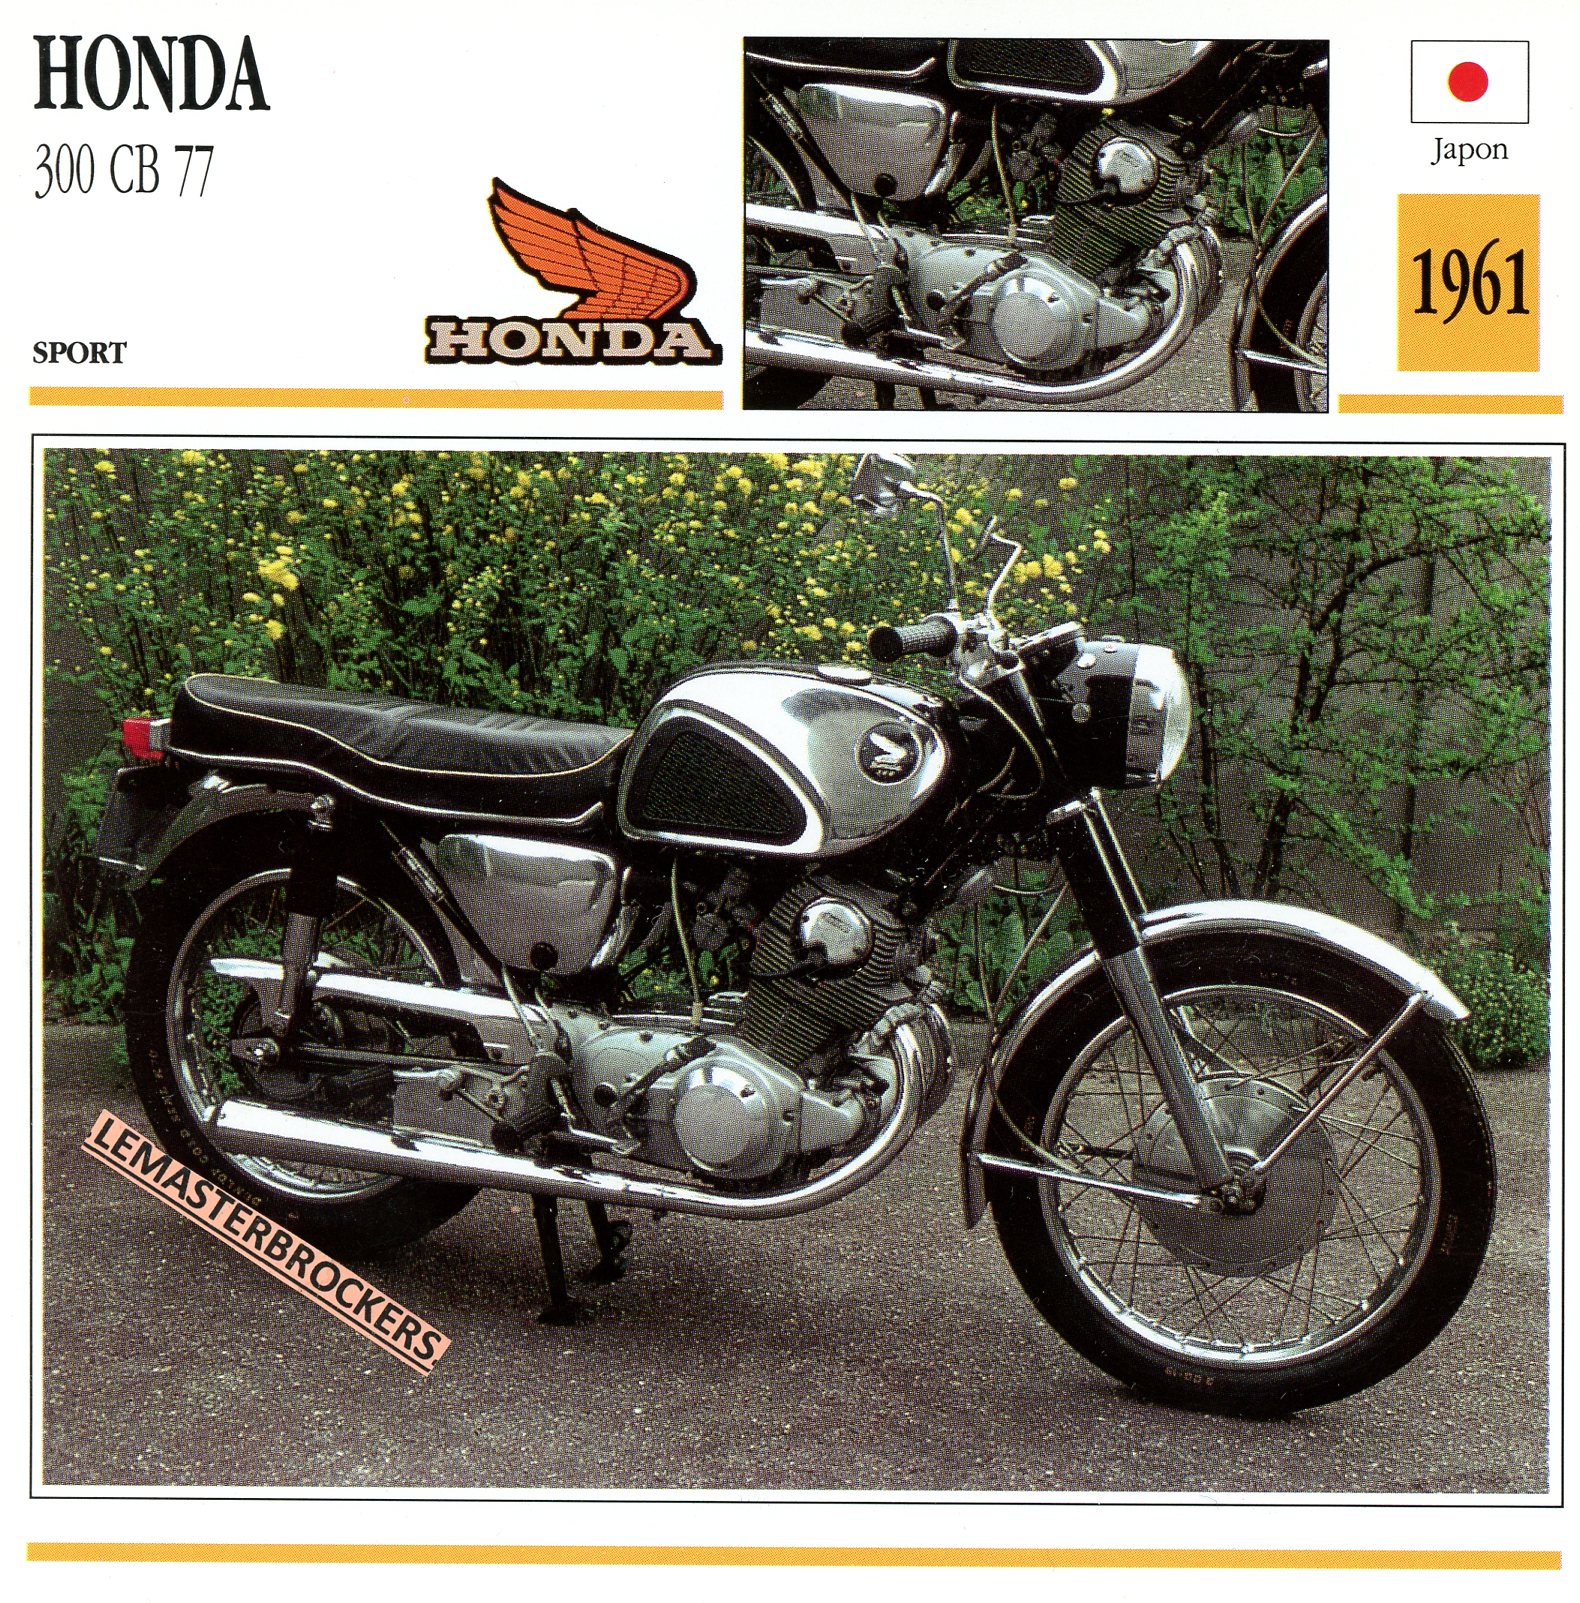 FICHE-MOTO-HONDA-300-CB-77-1961-LEMASTERBROCKERS-CARS-MOTORCYCLE